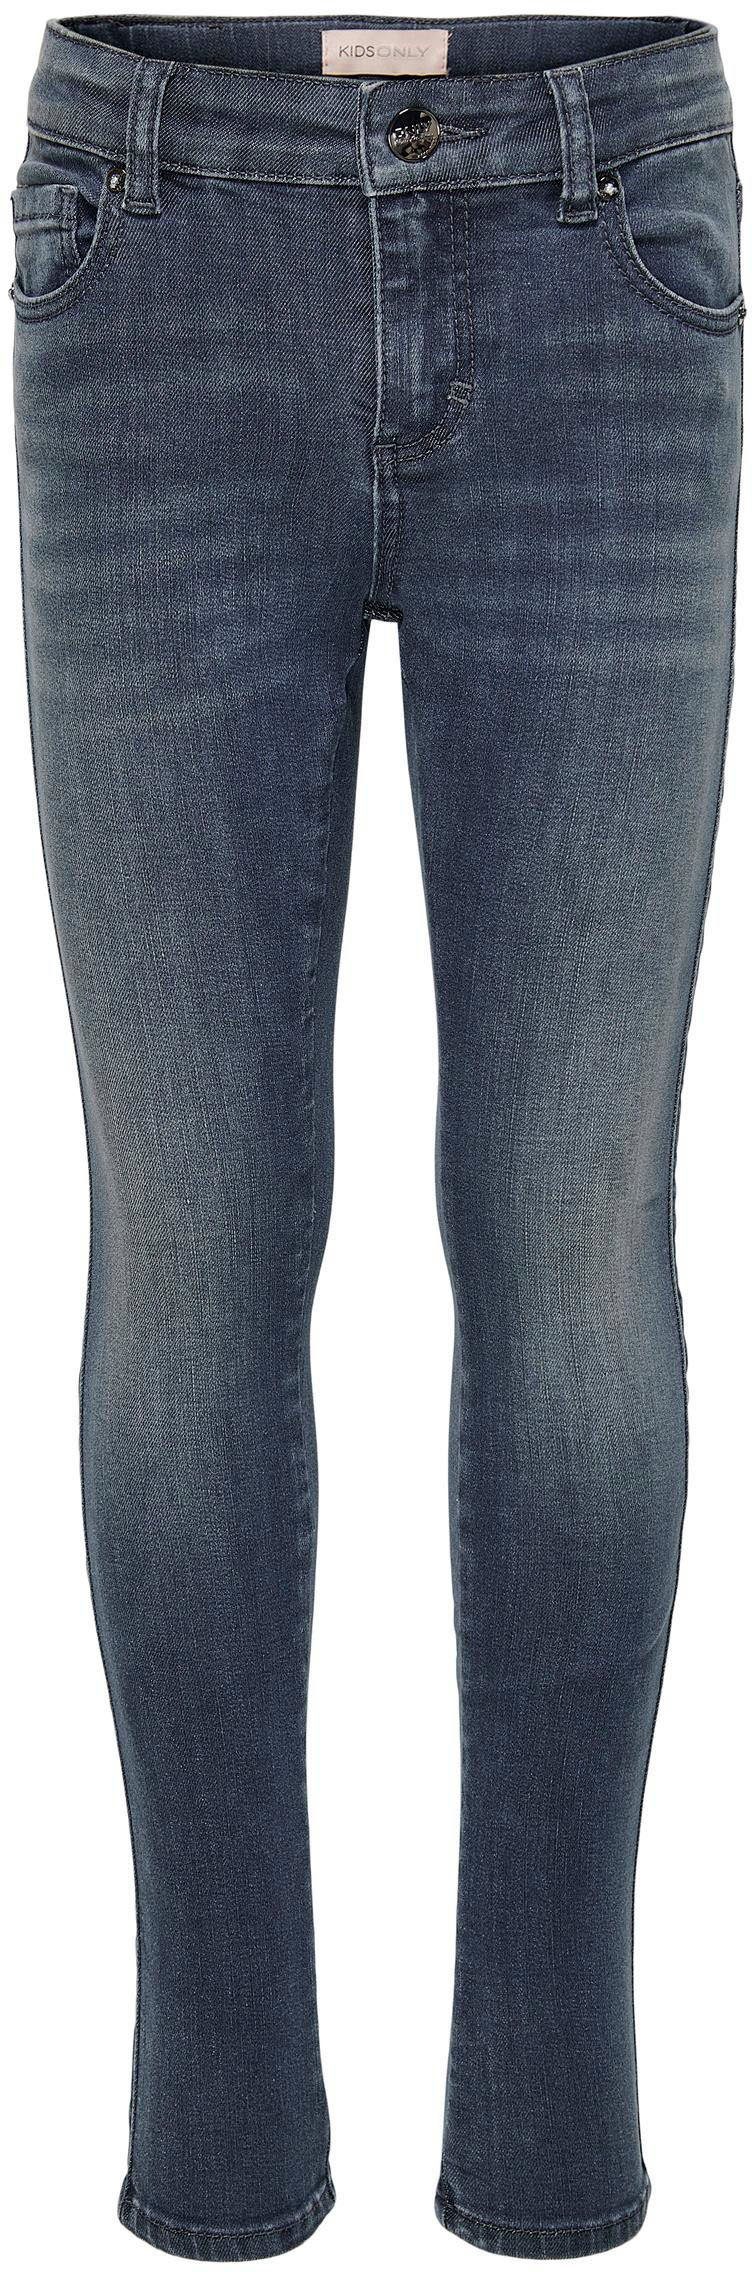 KOGRACHEL | HW KIDS online ONLY Stretch OTTO WAUW jeans SKINNY gekocht snel